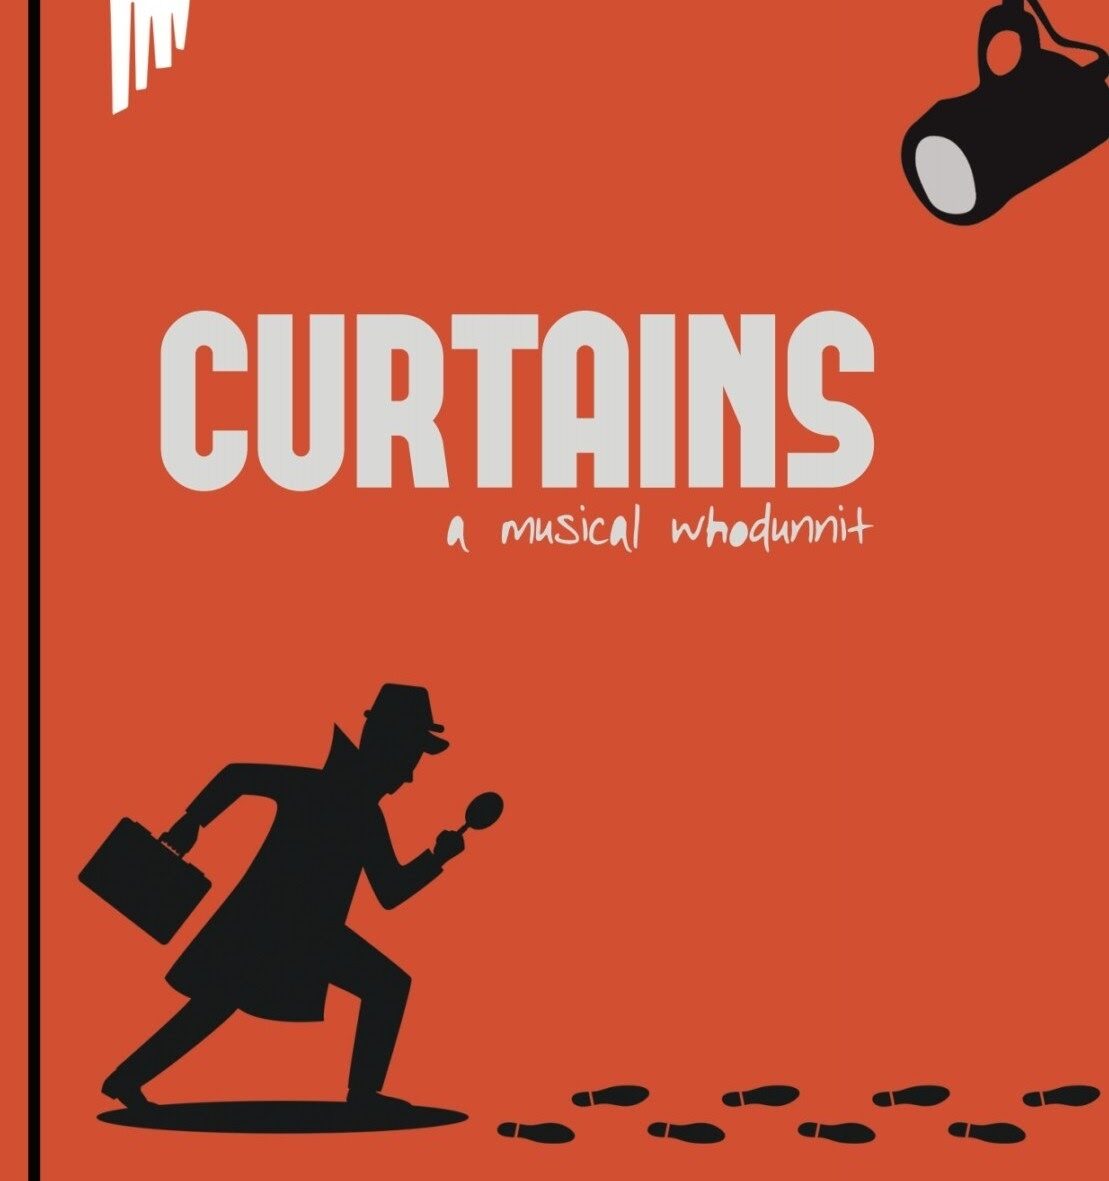 Curtains, a Murder Mystery Musical